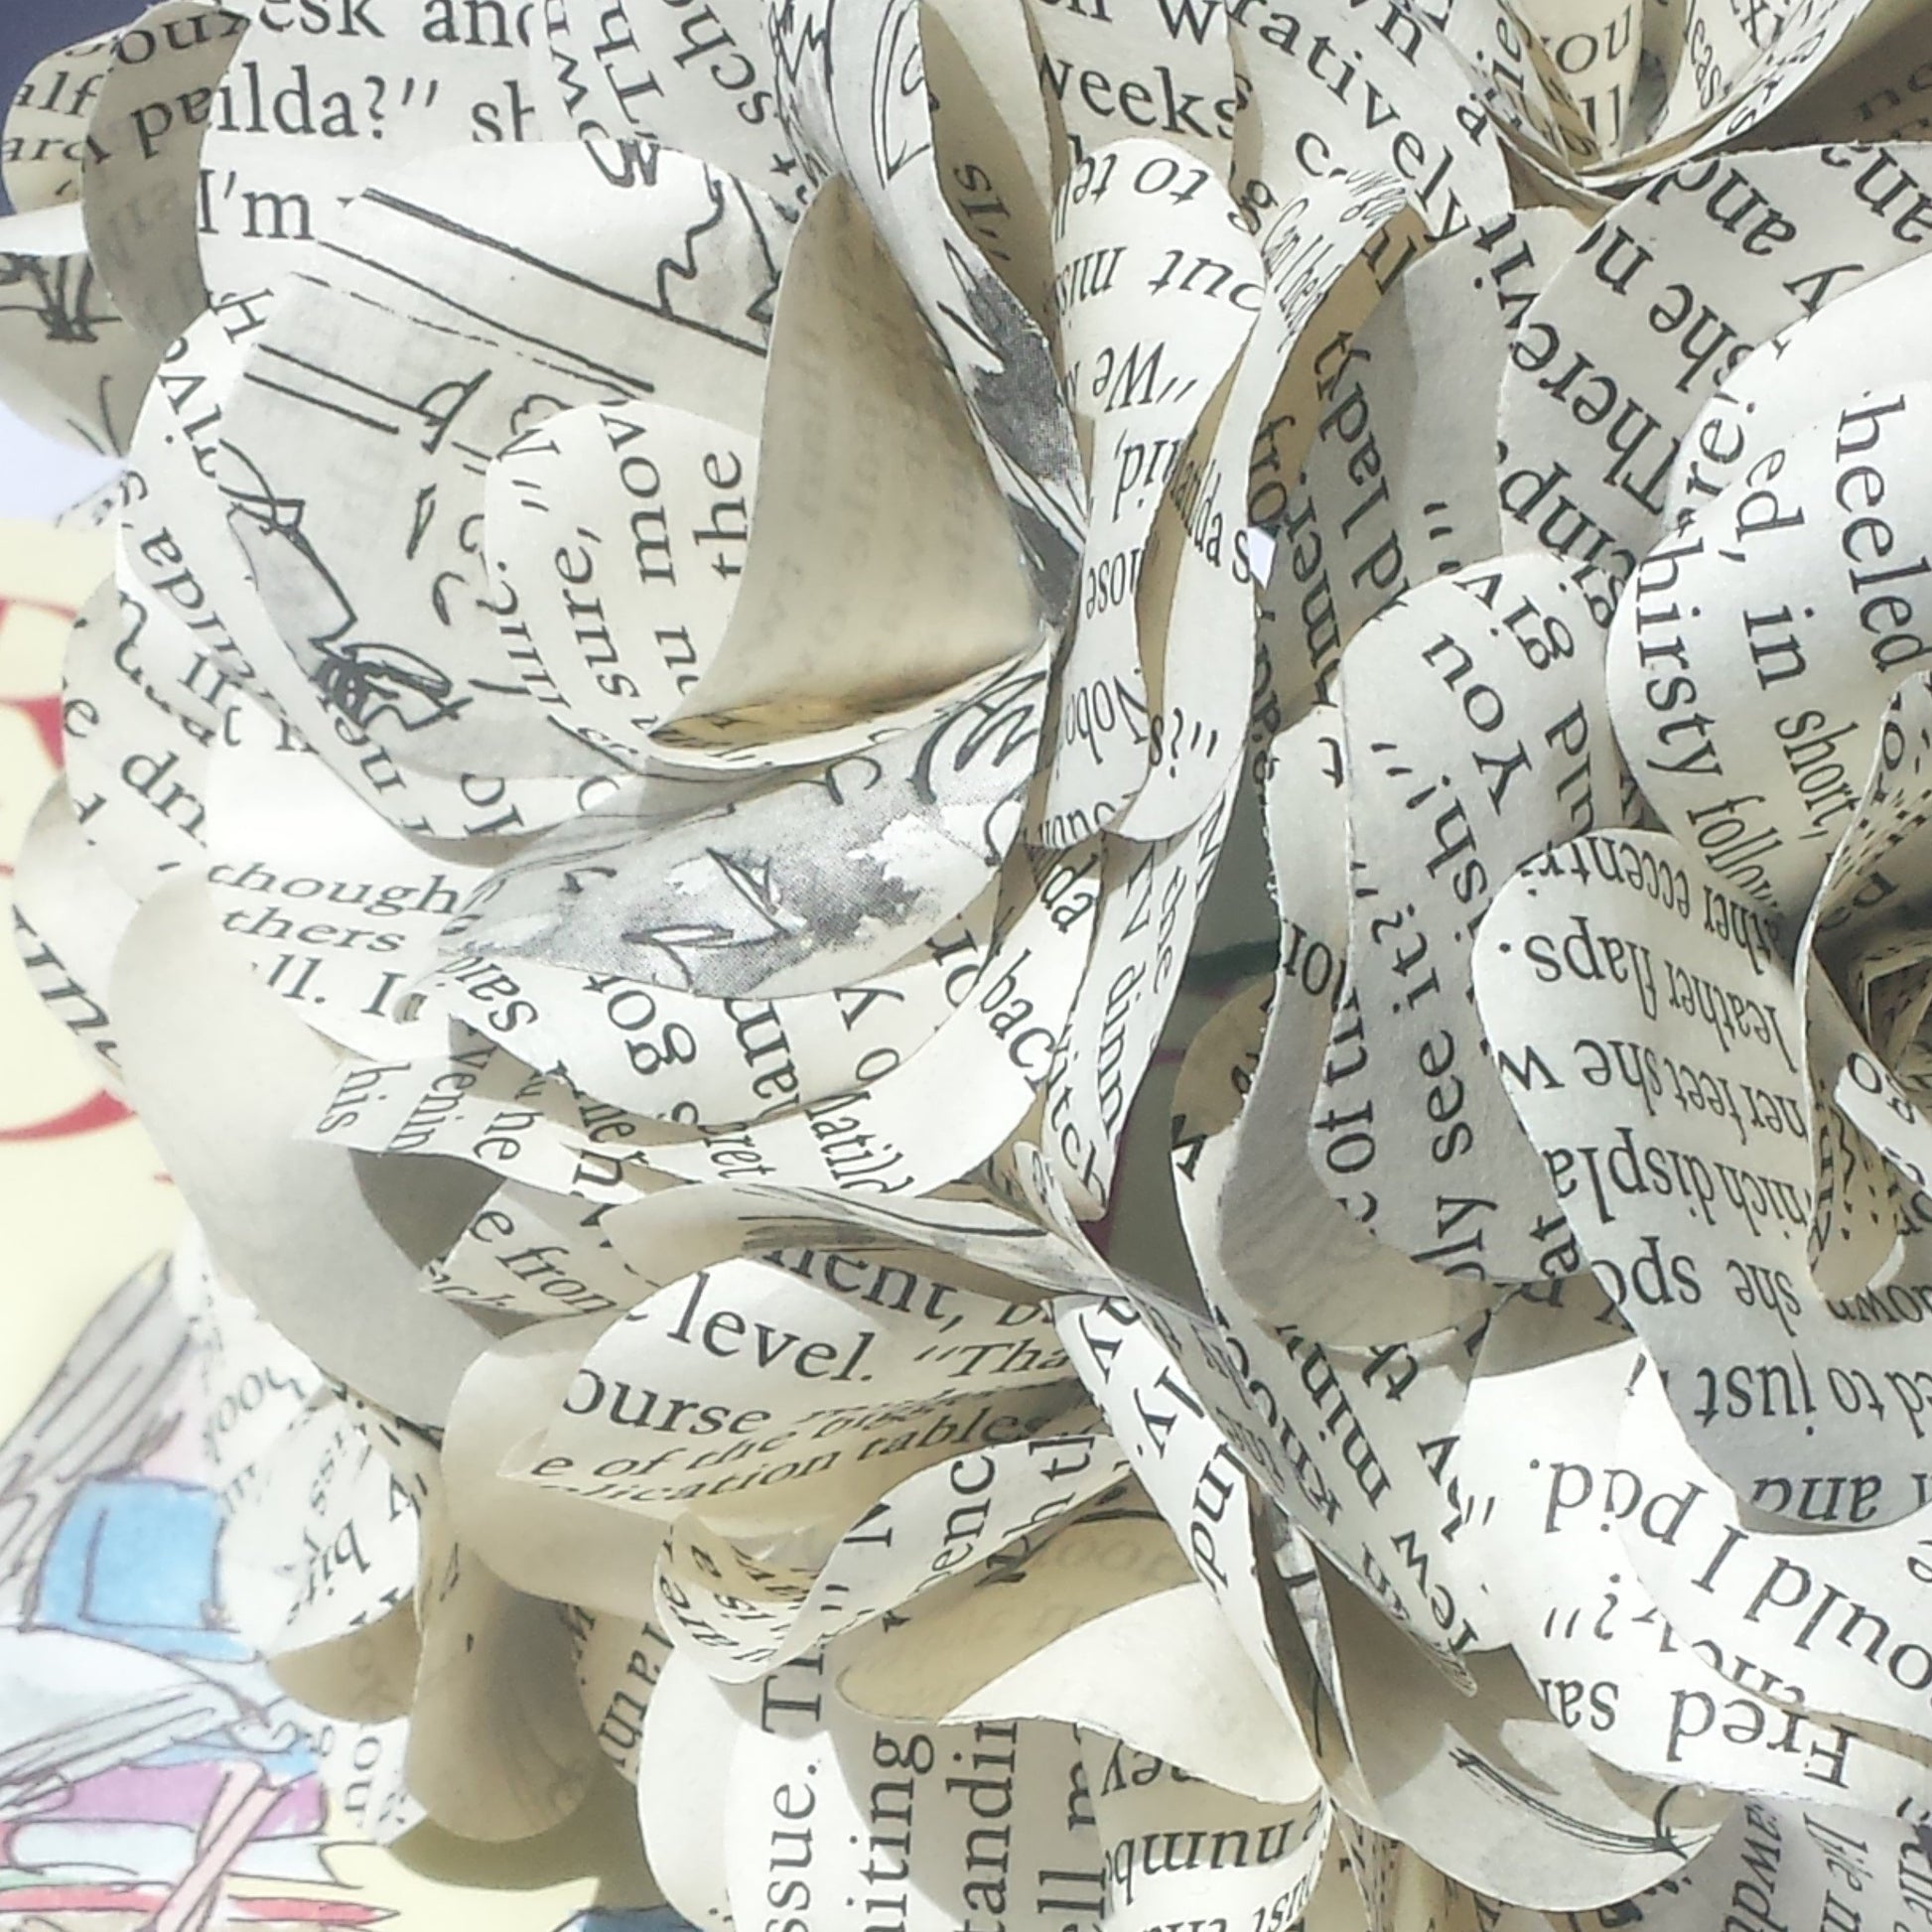 Matilda by Roald Dahl Paper Flowers